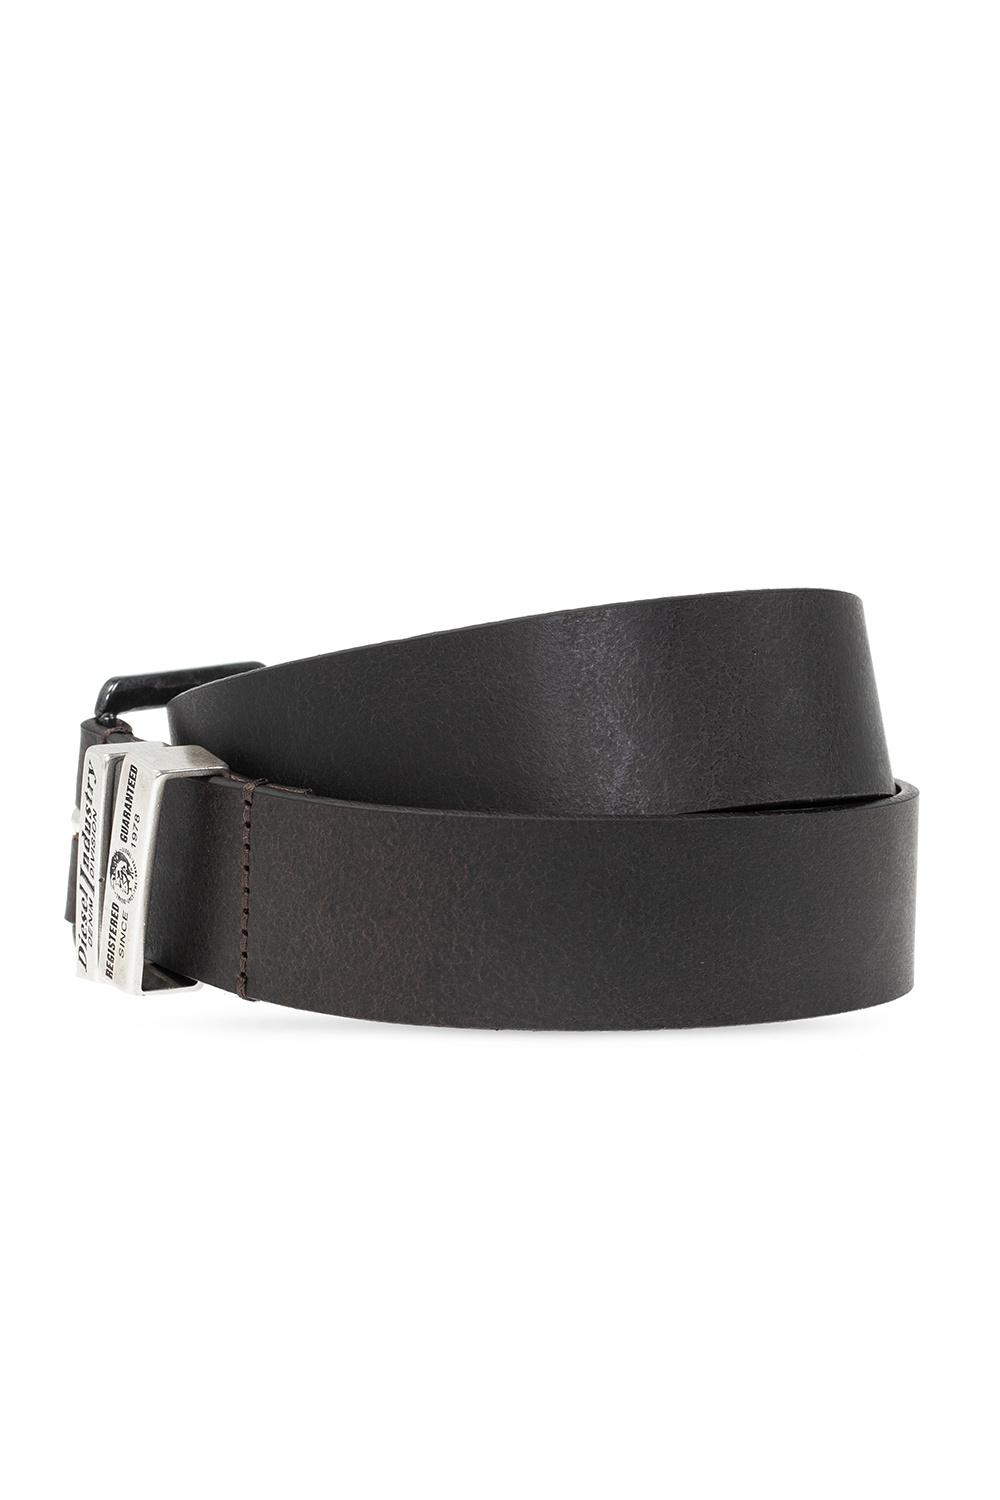 Diesel ‘B-Guarantee’ leather belt